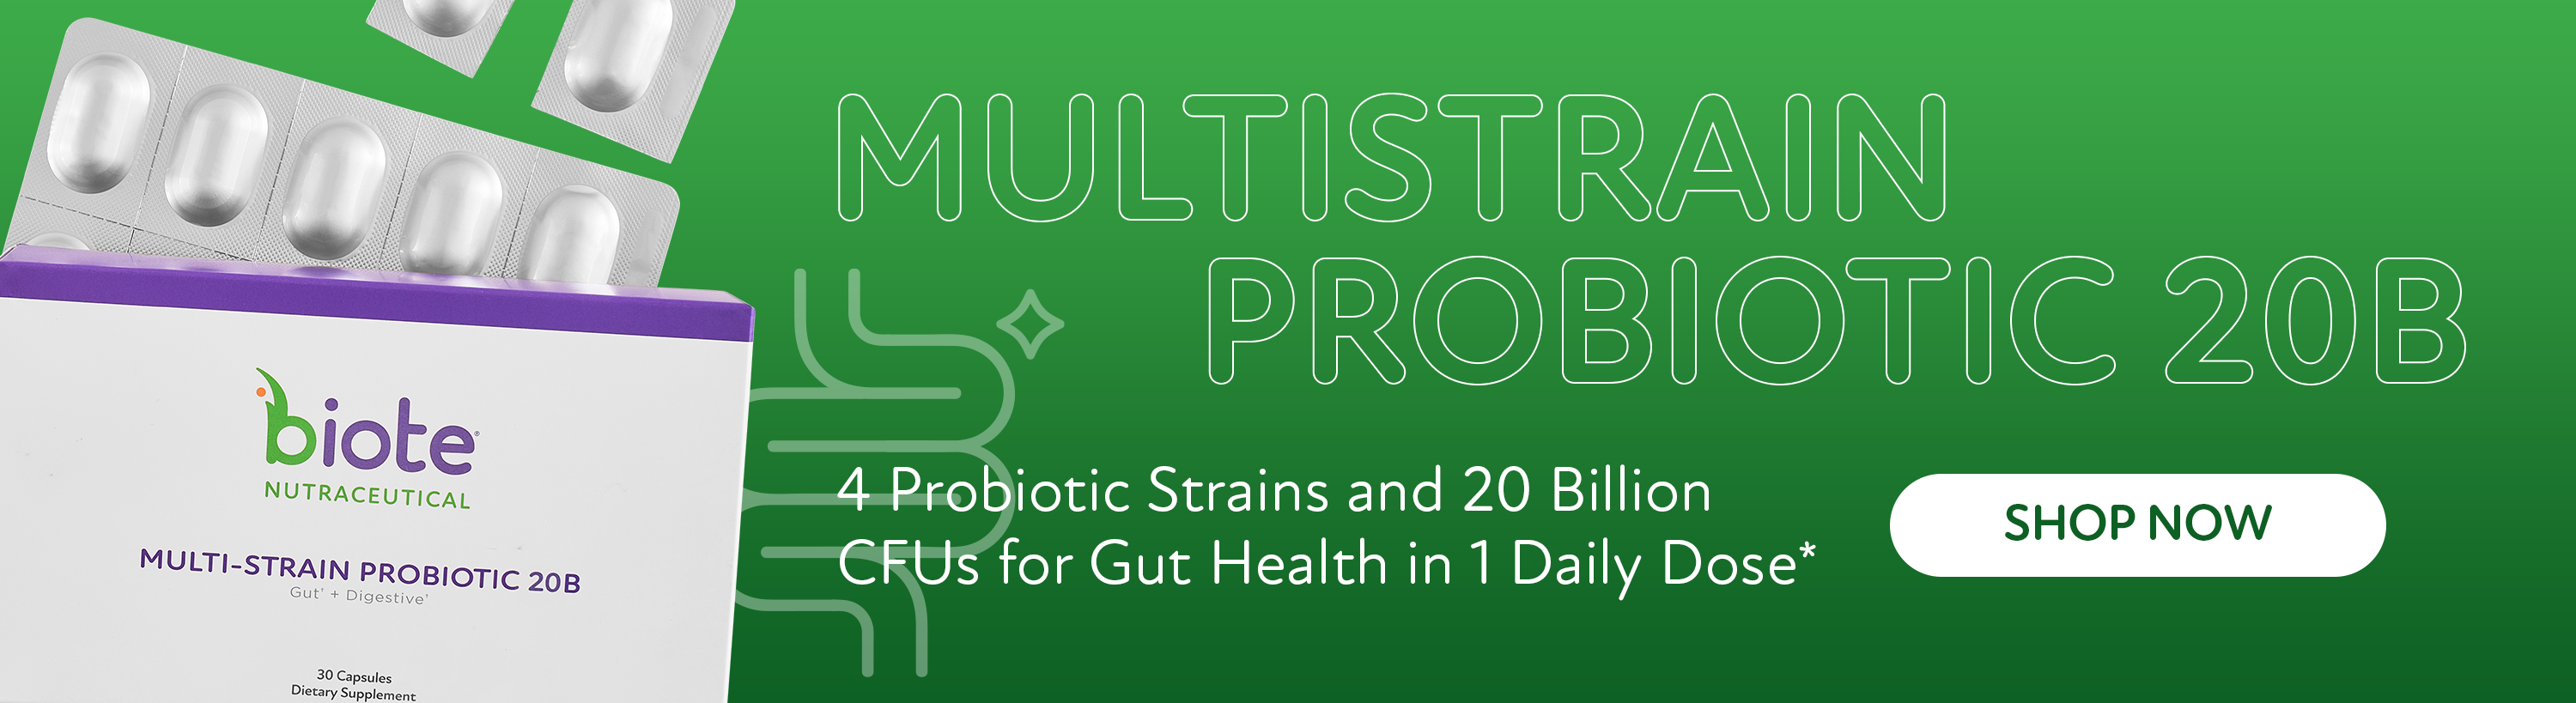 /multi-strain-probiotic-20b-single-box-30-capsules-1.html?internal_ref=slide1_march24multi